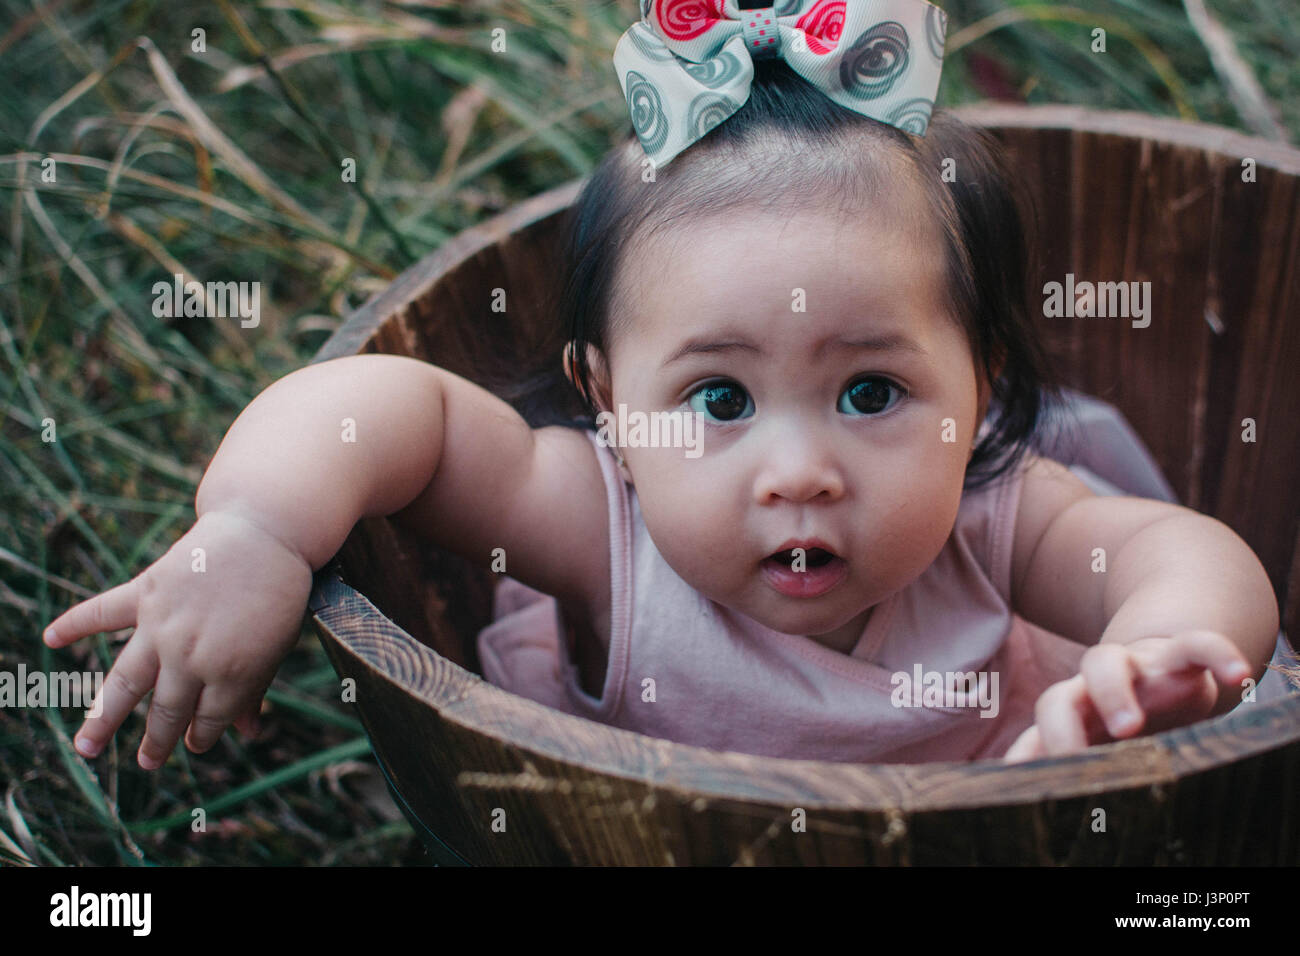 Baby in Barrel Stock Photo